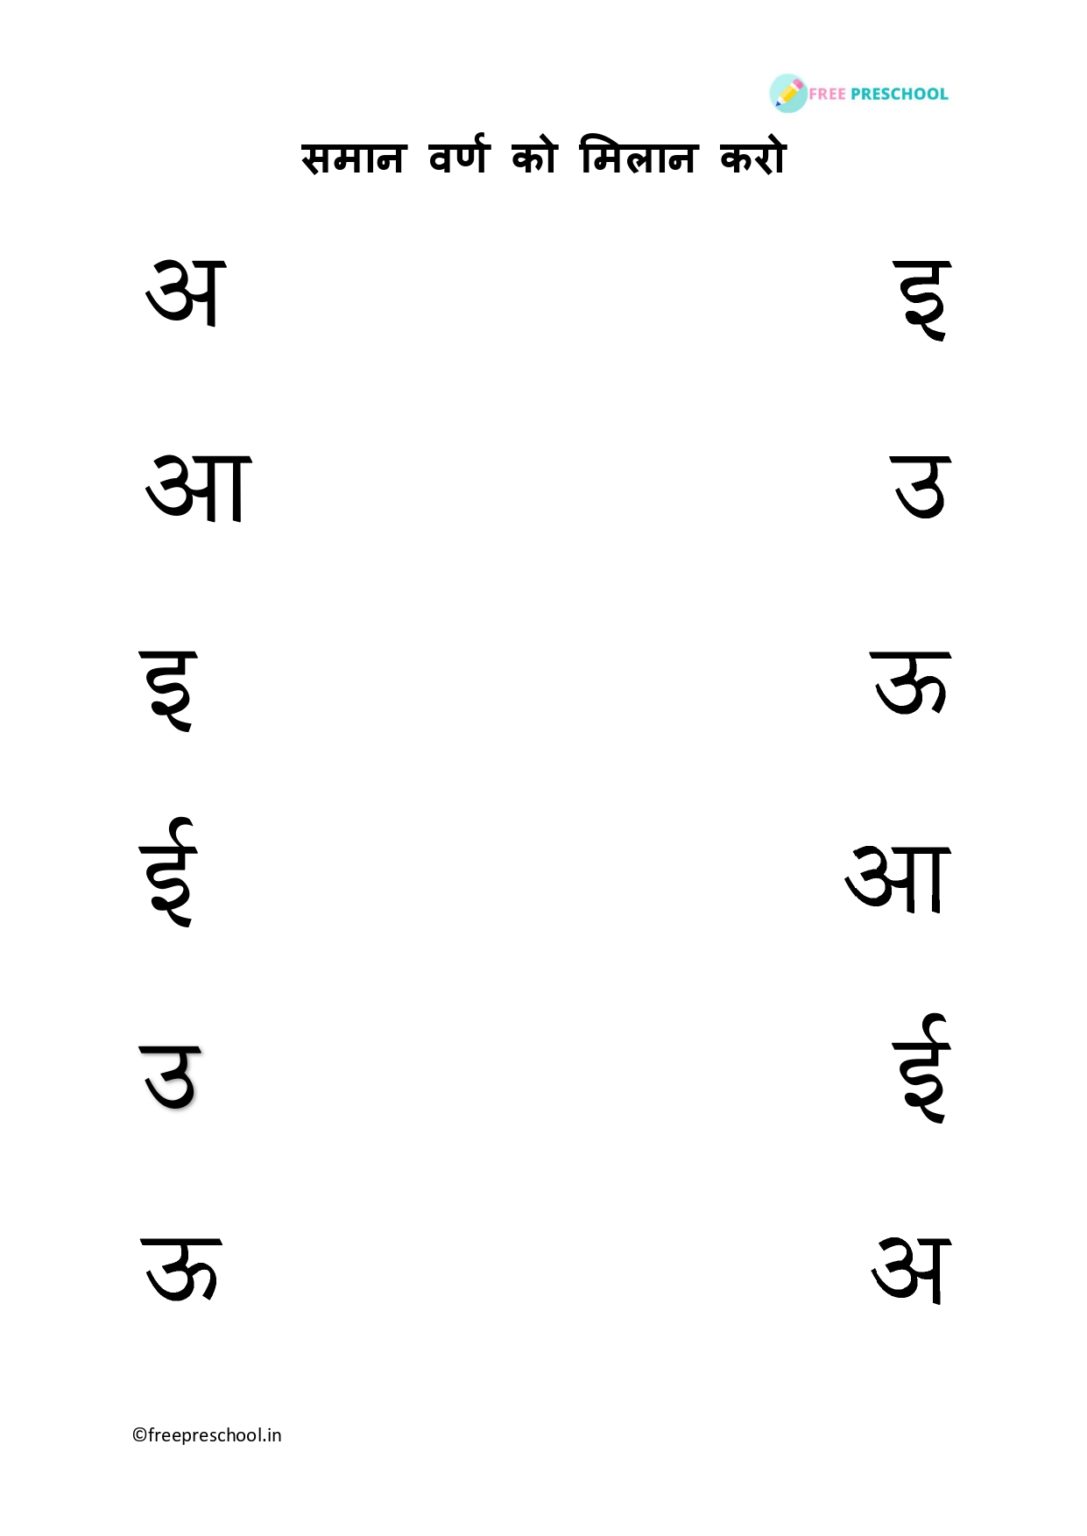 Hindi Worksheet On Alphabets Worksheet | Images and Photos finder